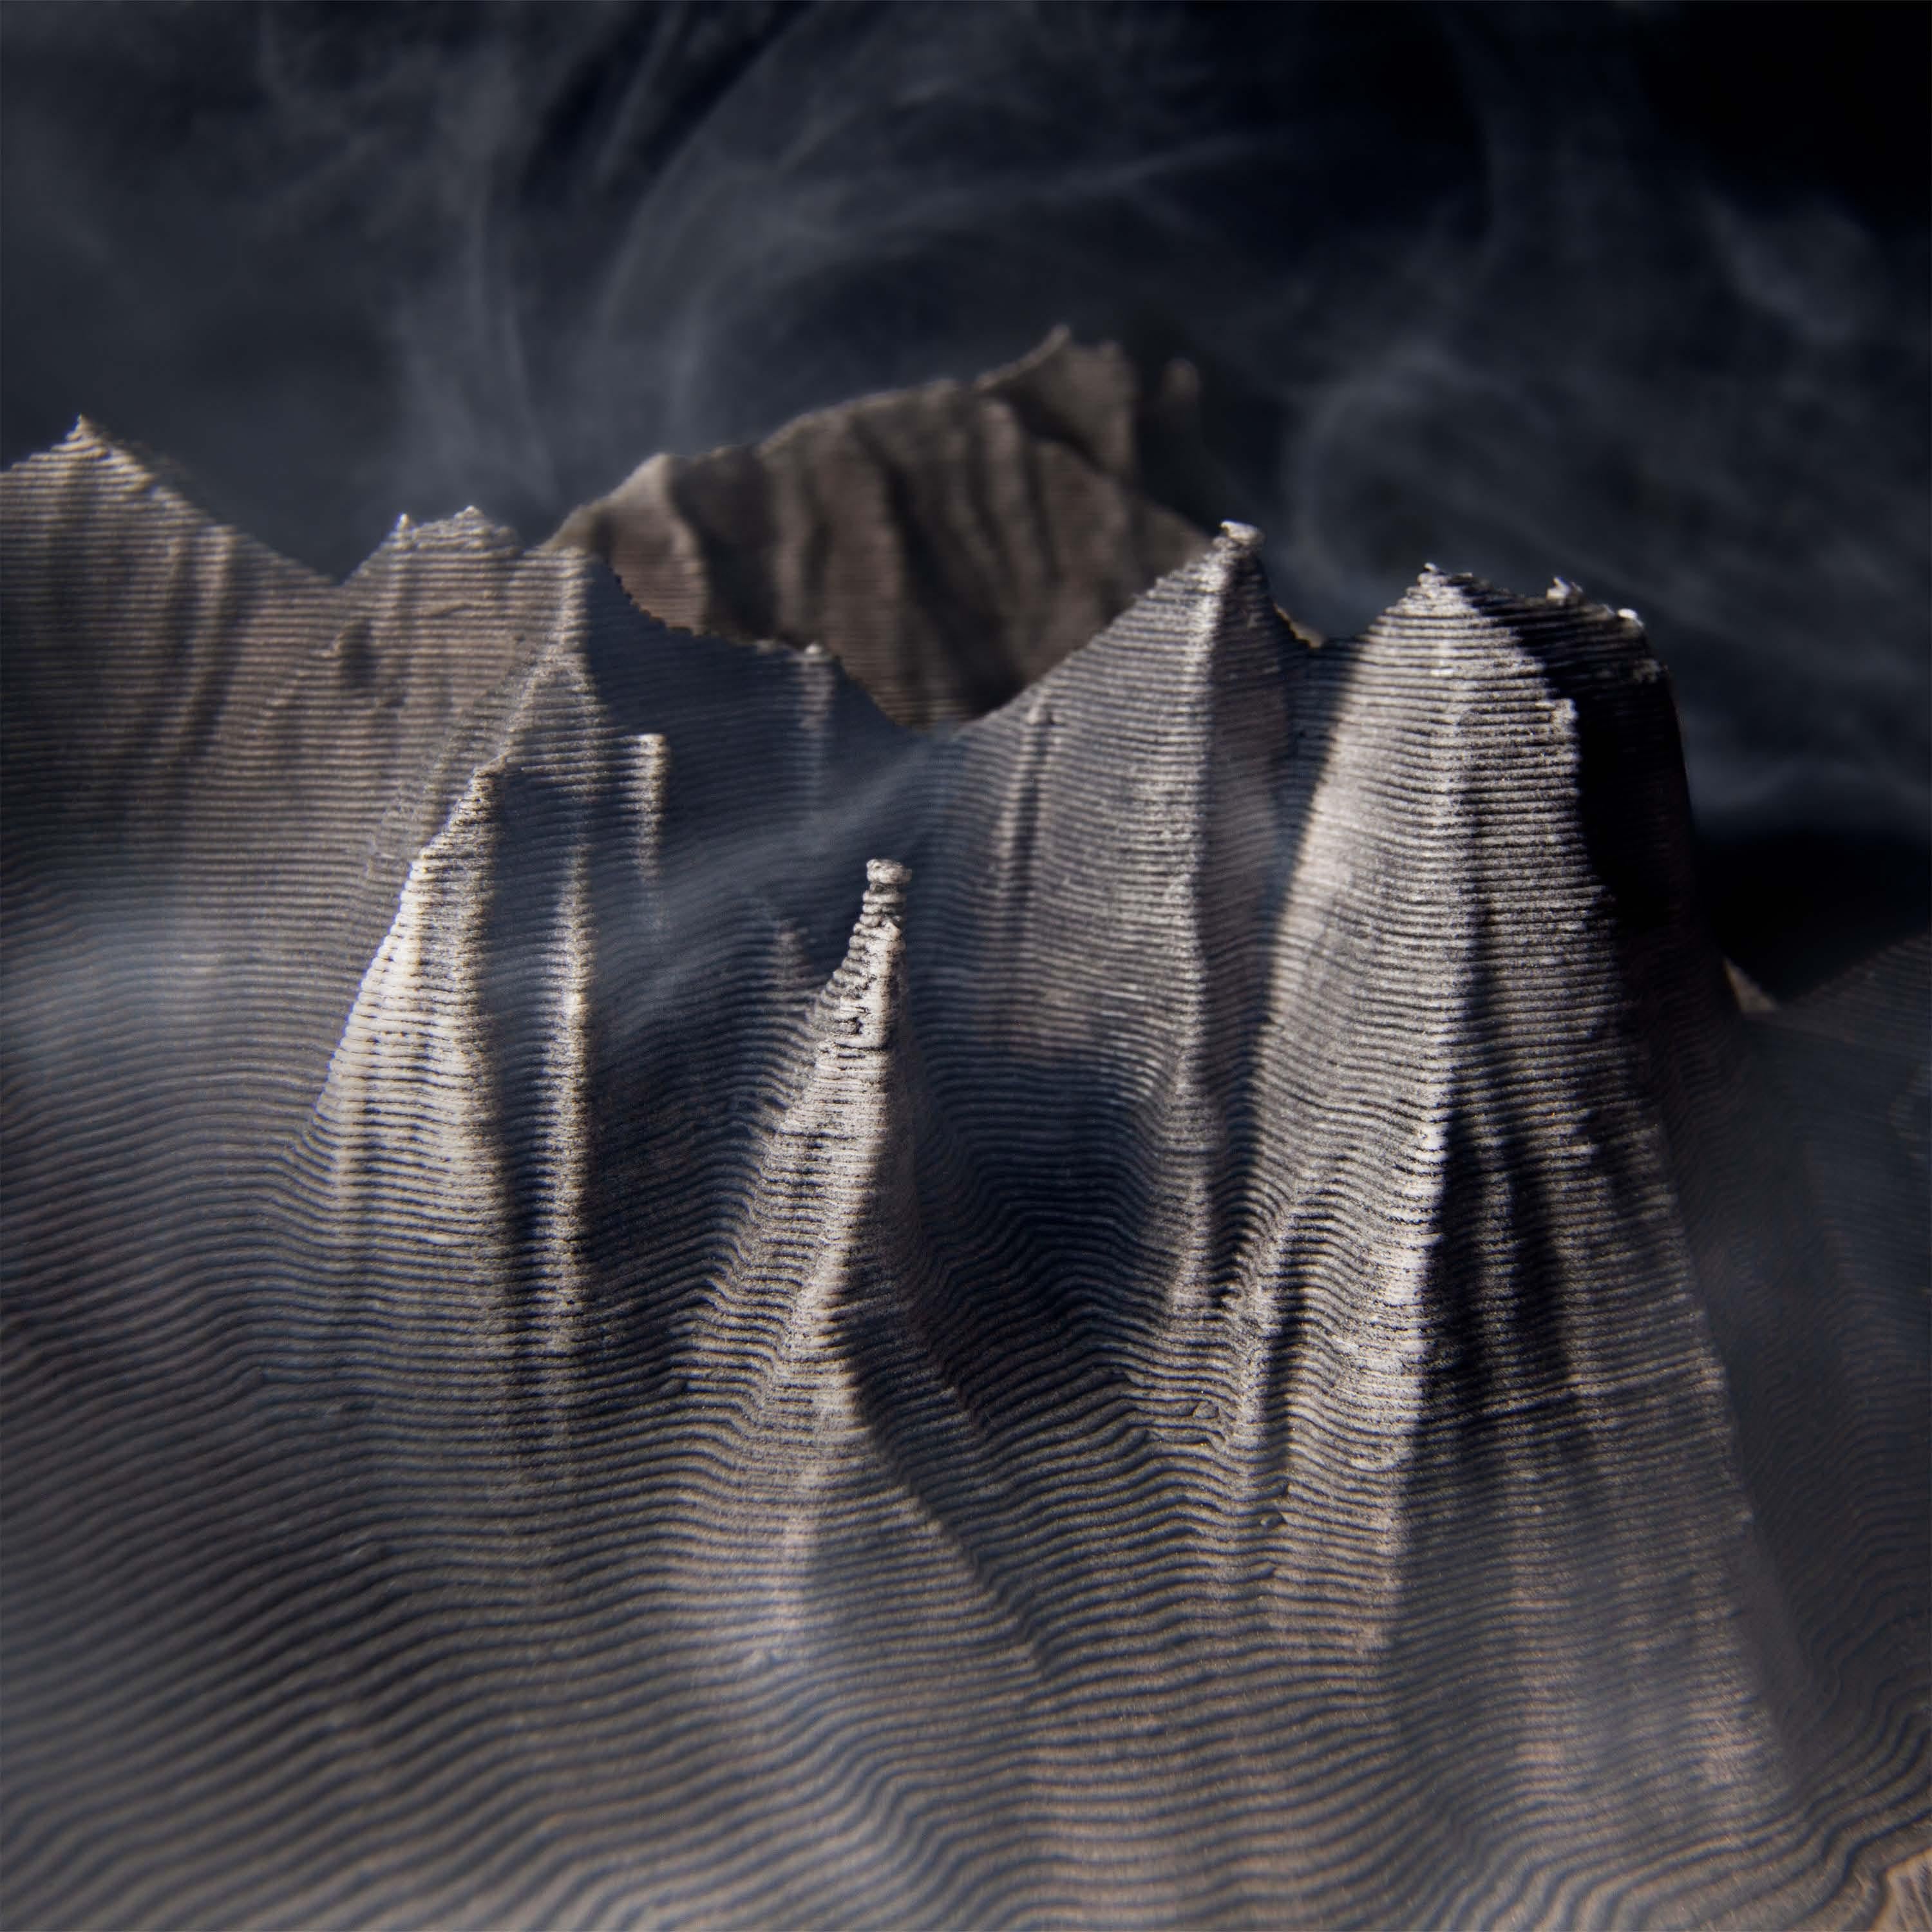 Edward Bateman Landscape Photograph - Yosemite Spires No. 1 (with 3D printed landscape)